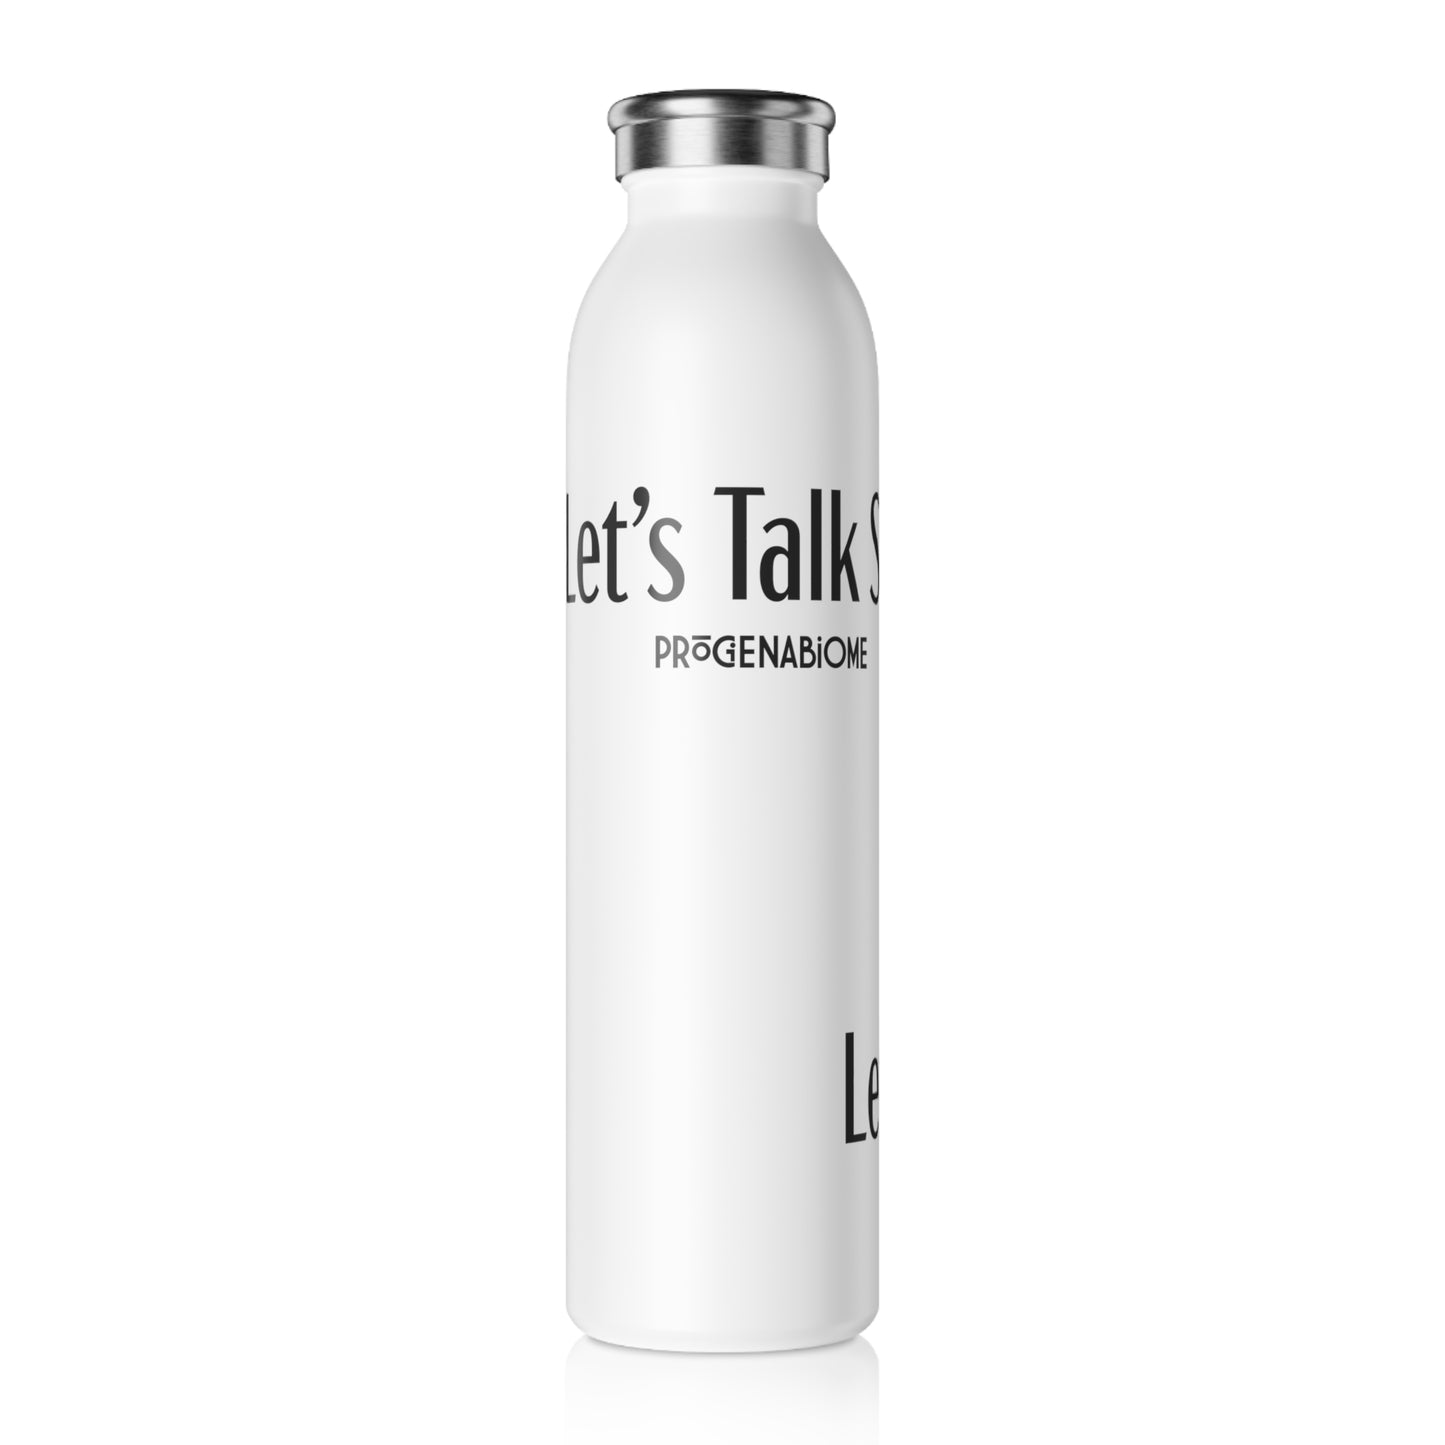 Let's Talk Sh!t Straightline Slim Water Bottle